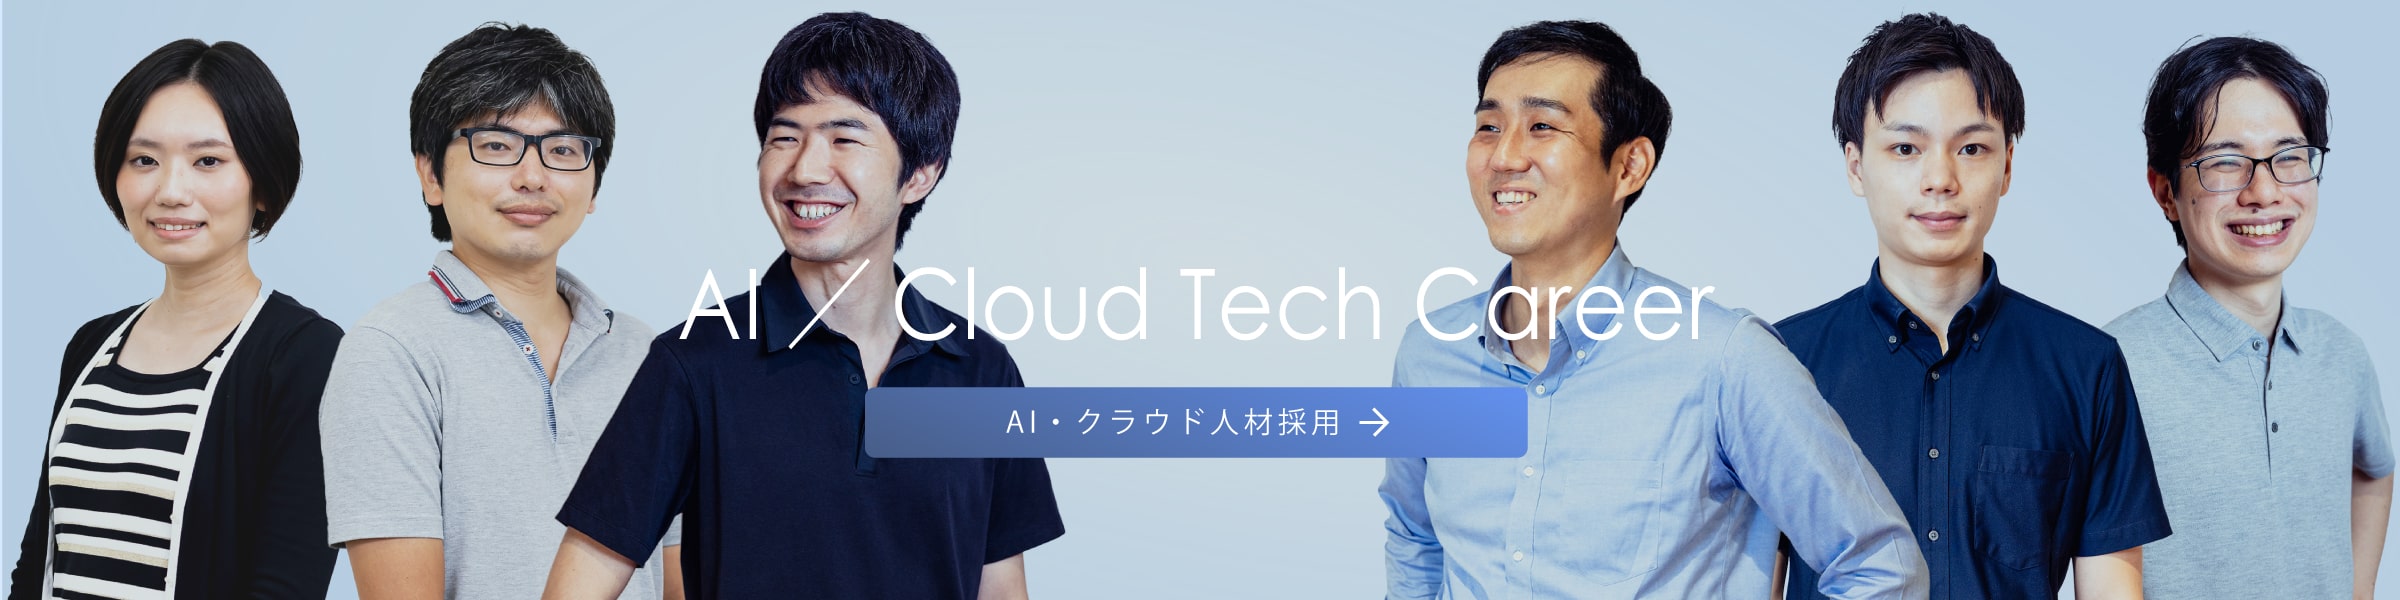 AI/Cloud Tech Career AI・クラウド人材採用